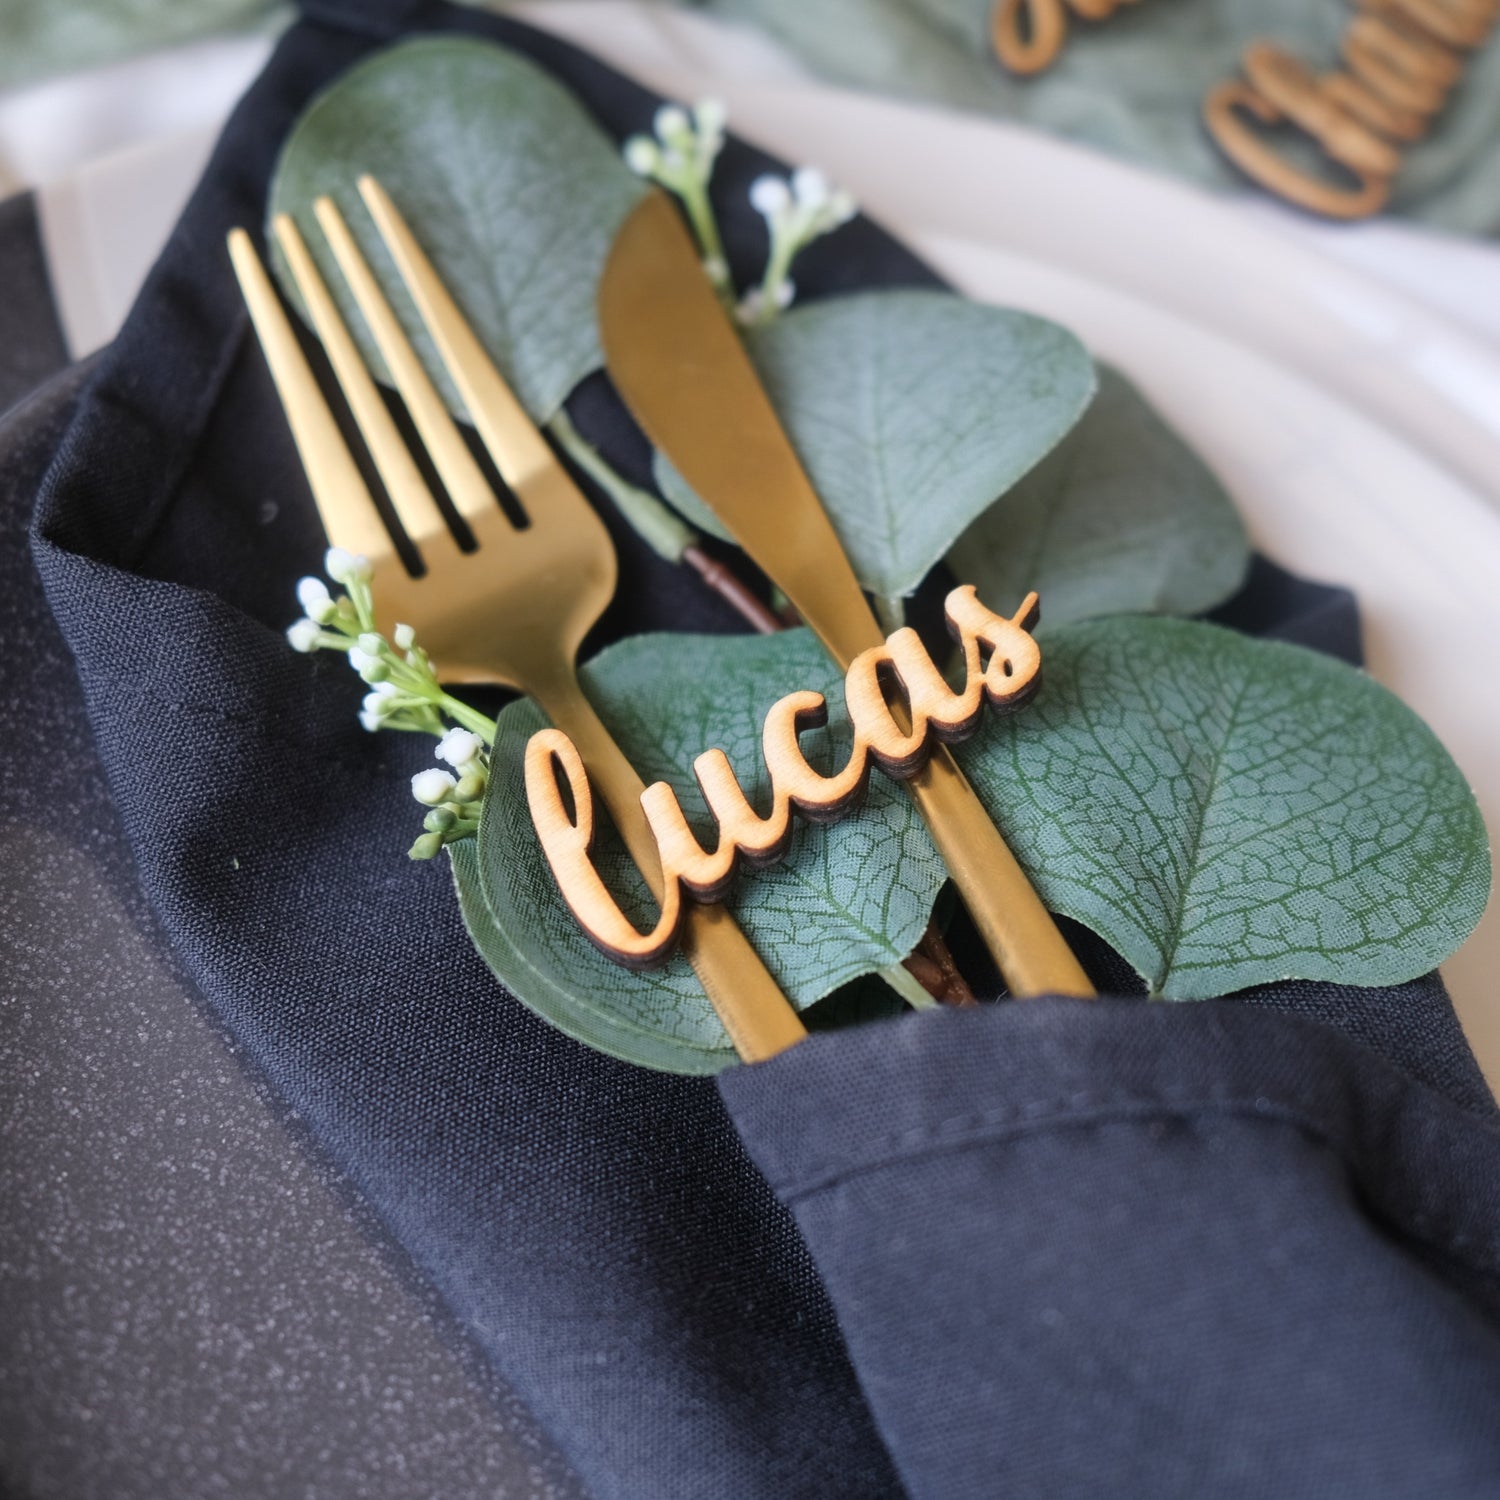 Rustic wedding name tags